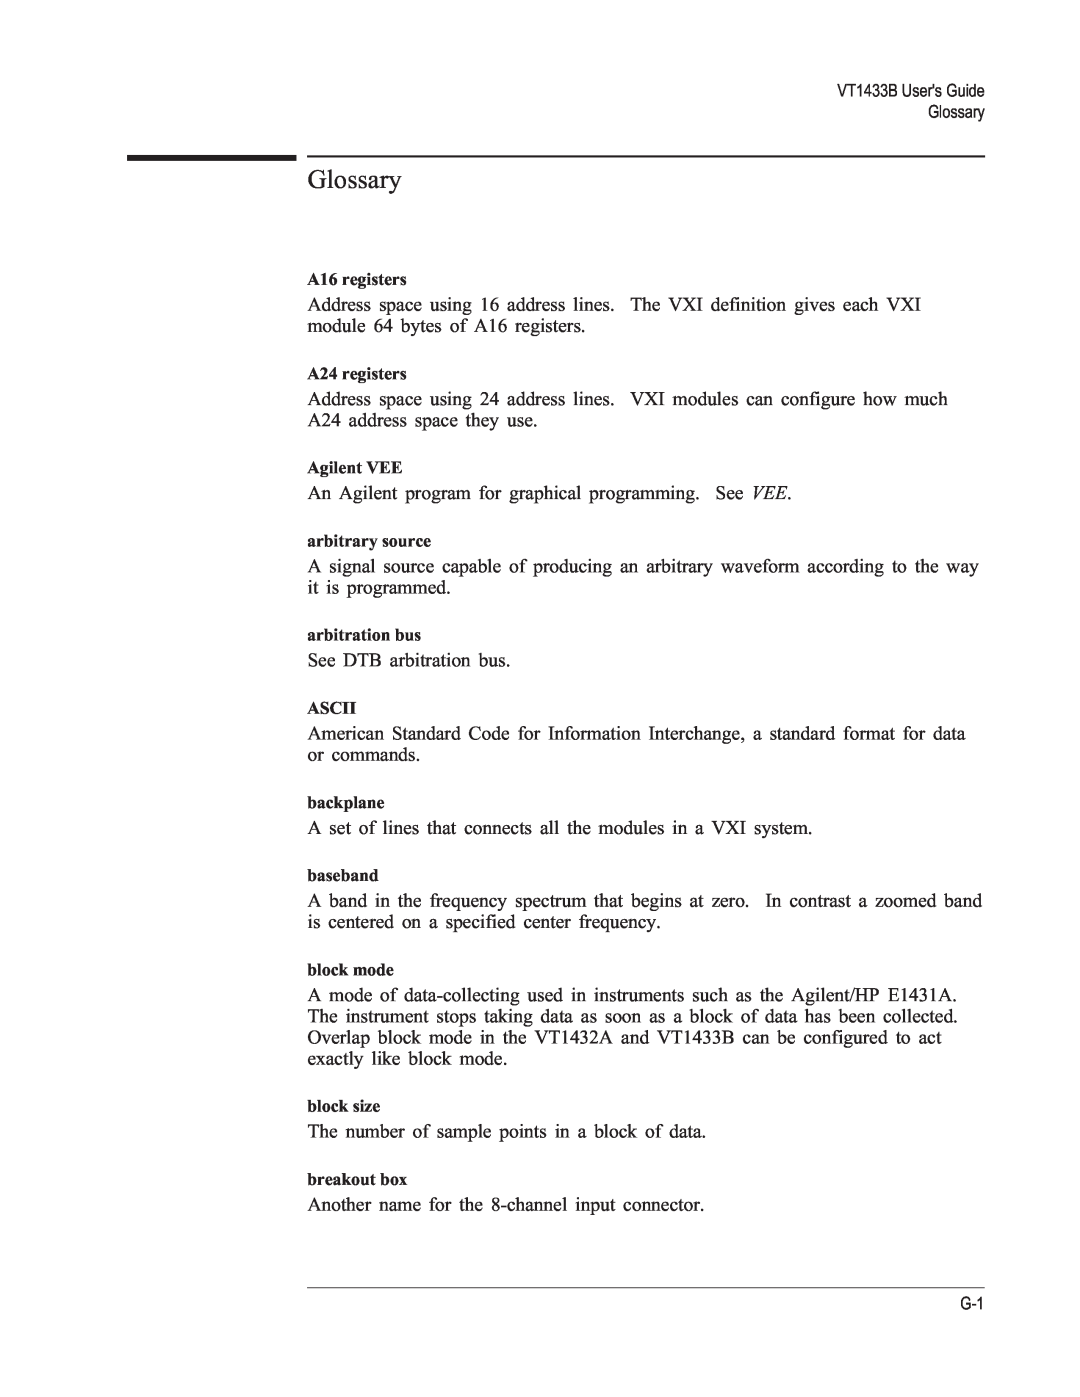 VXI VT1433B manual Glossary 